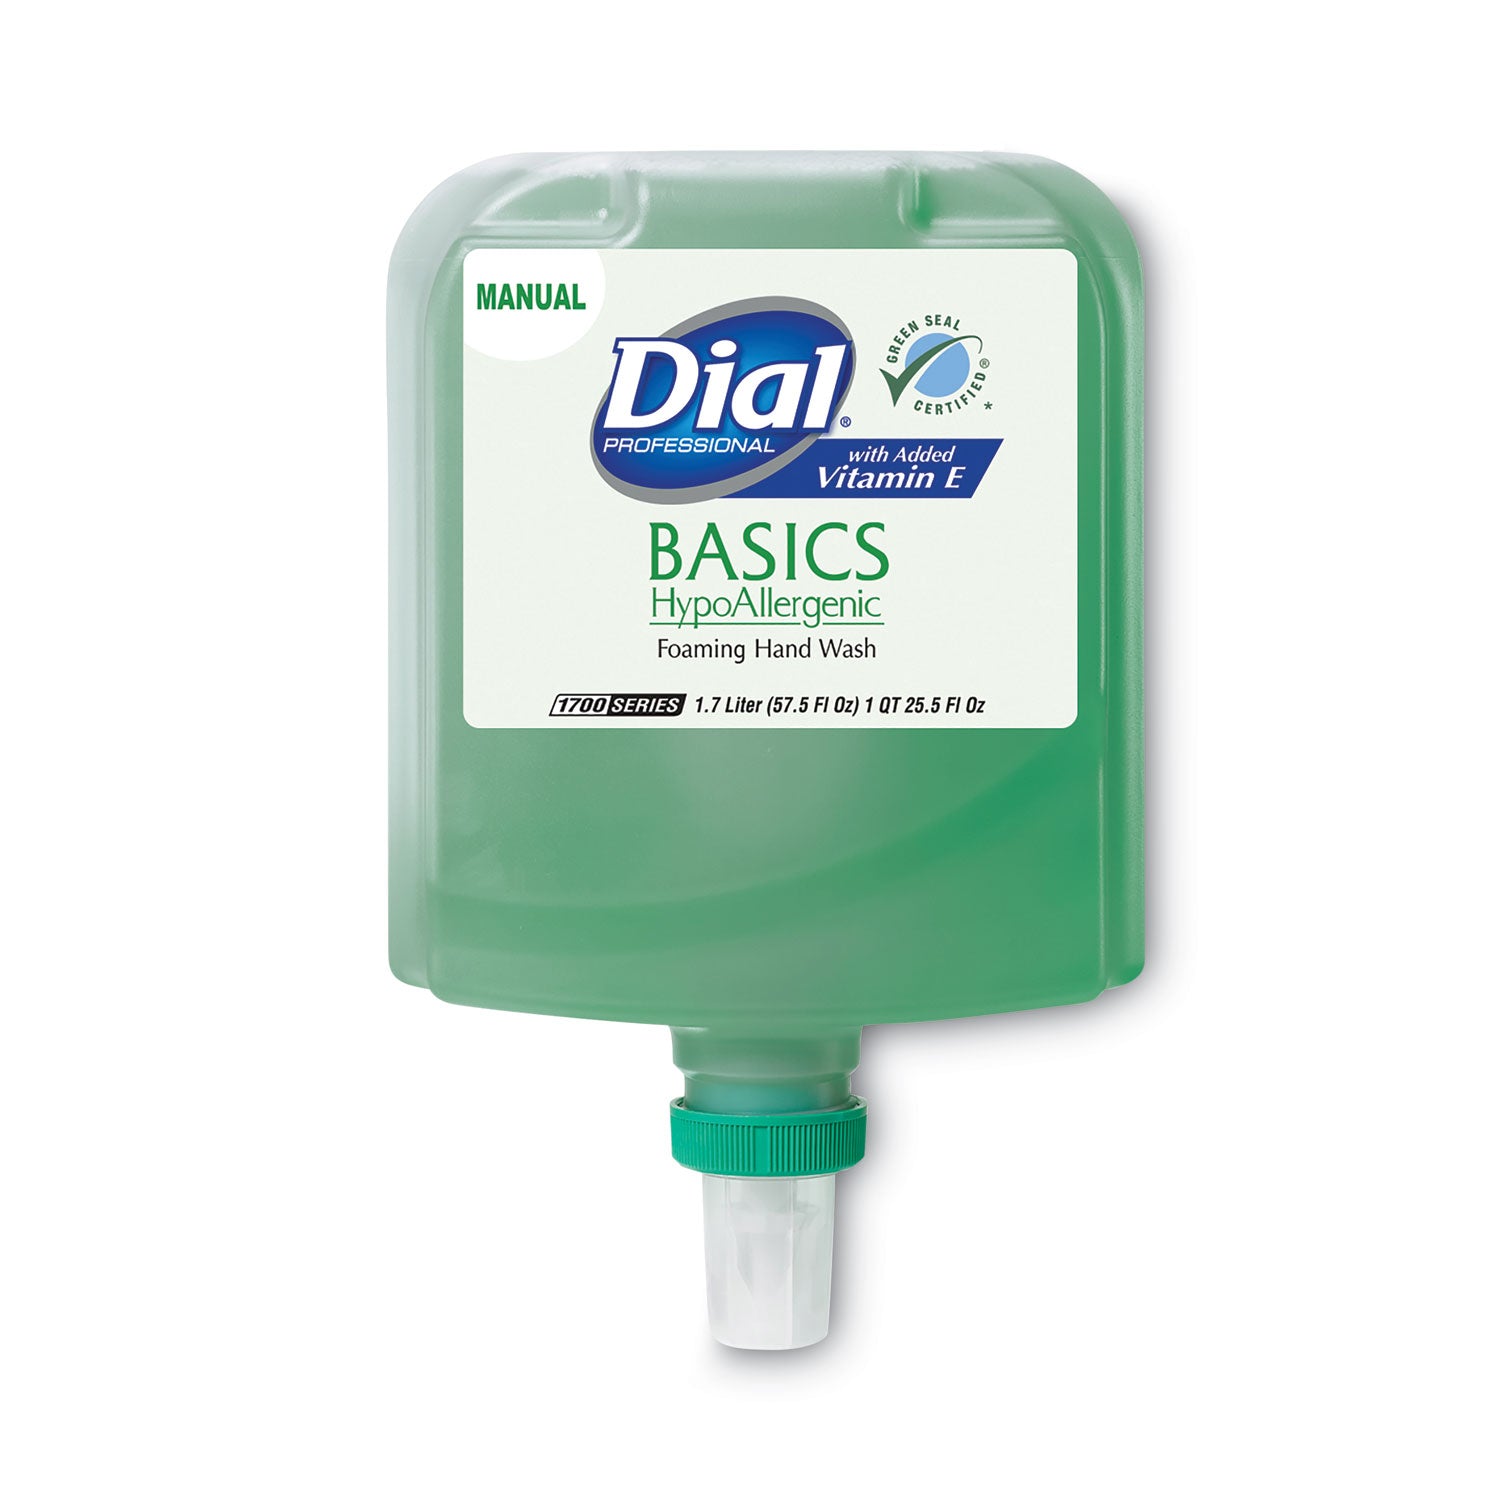 basics-hypoallergenic-foaming-hand-wash-refill-for-dial-1700-dispenser-honeysuckle-with-vitamin-e-17-l-3-carton_dia32499 - 1